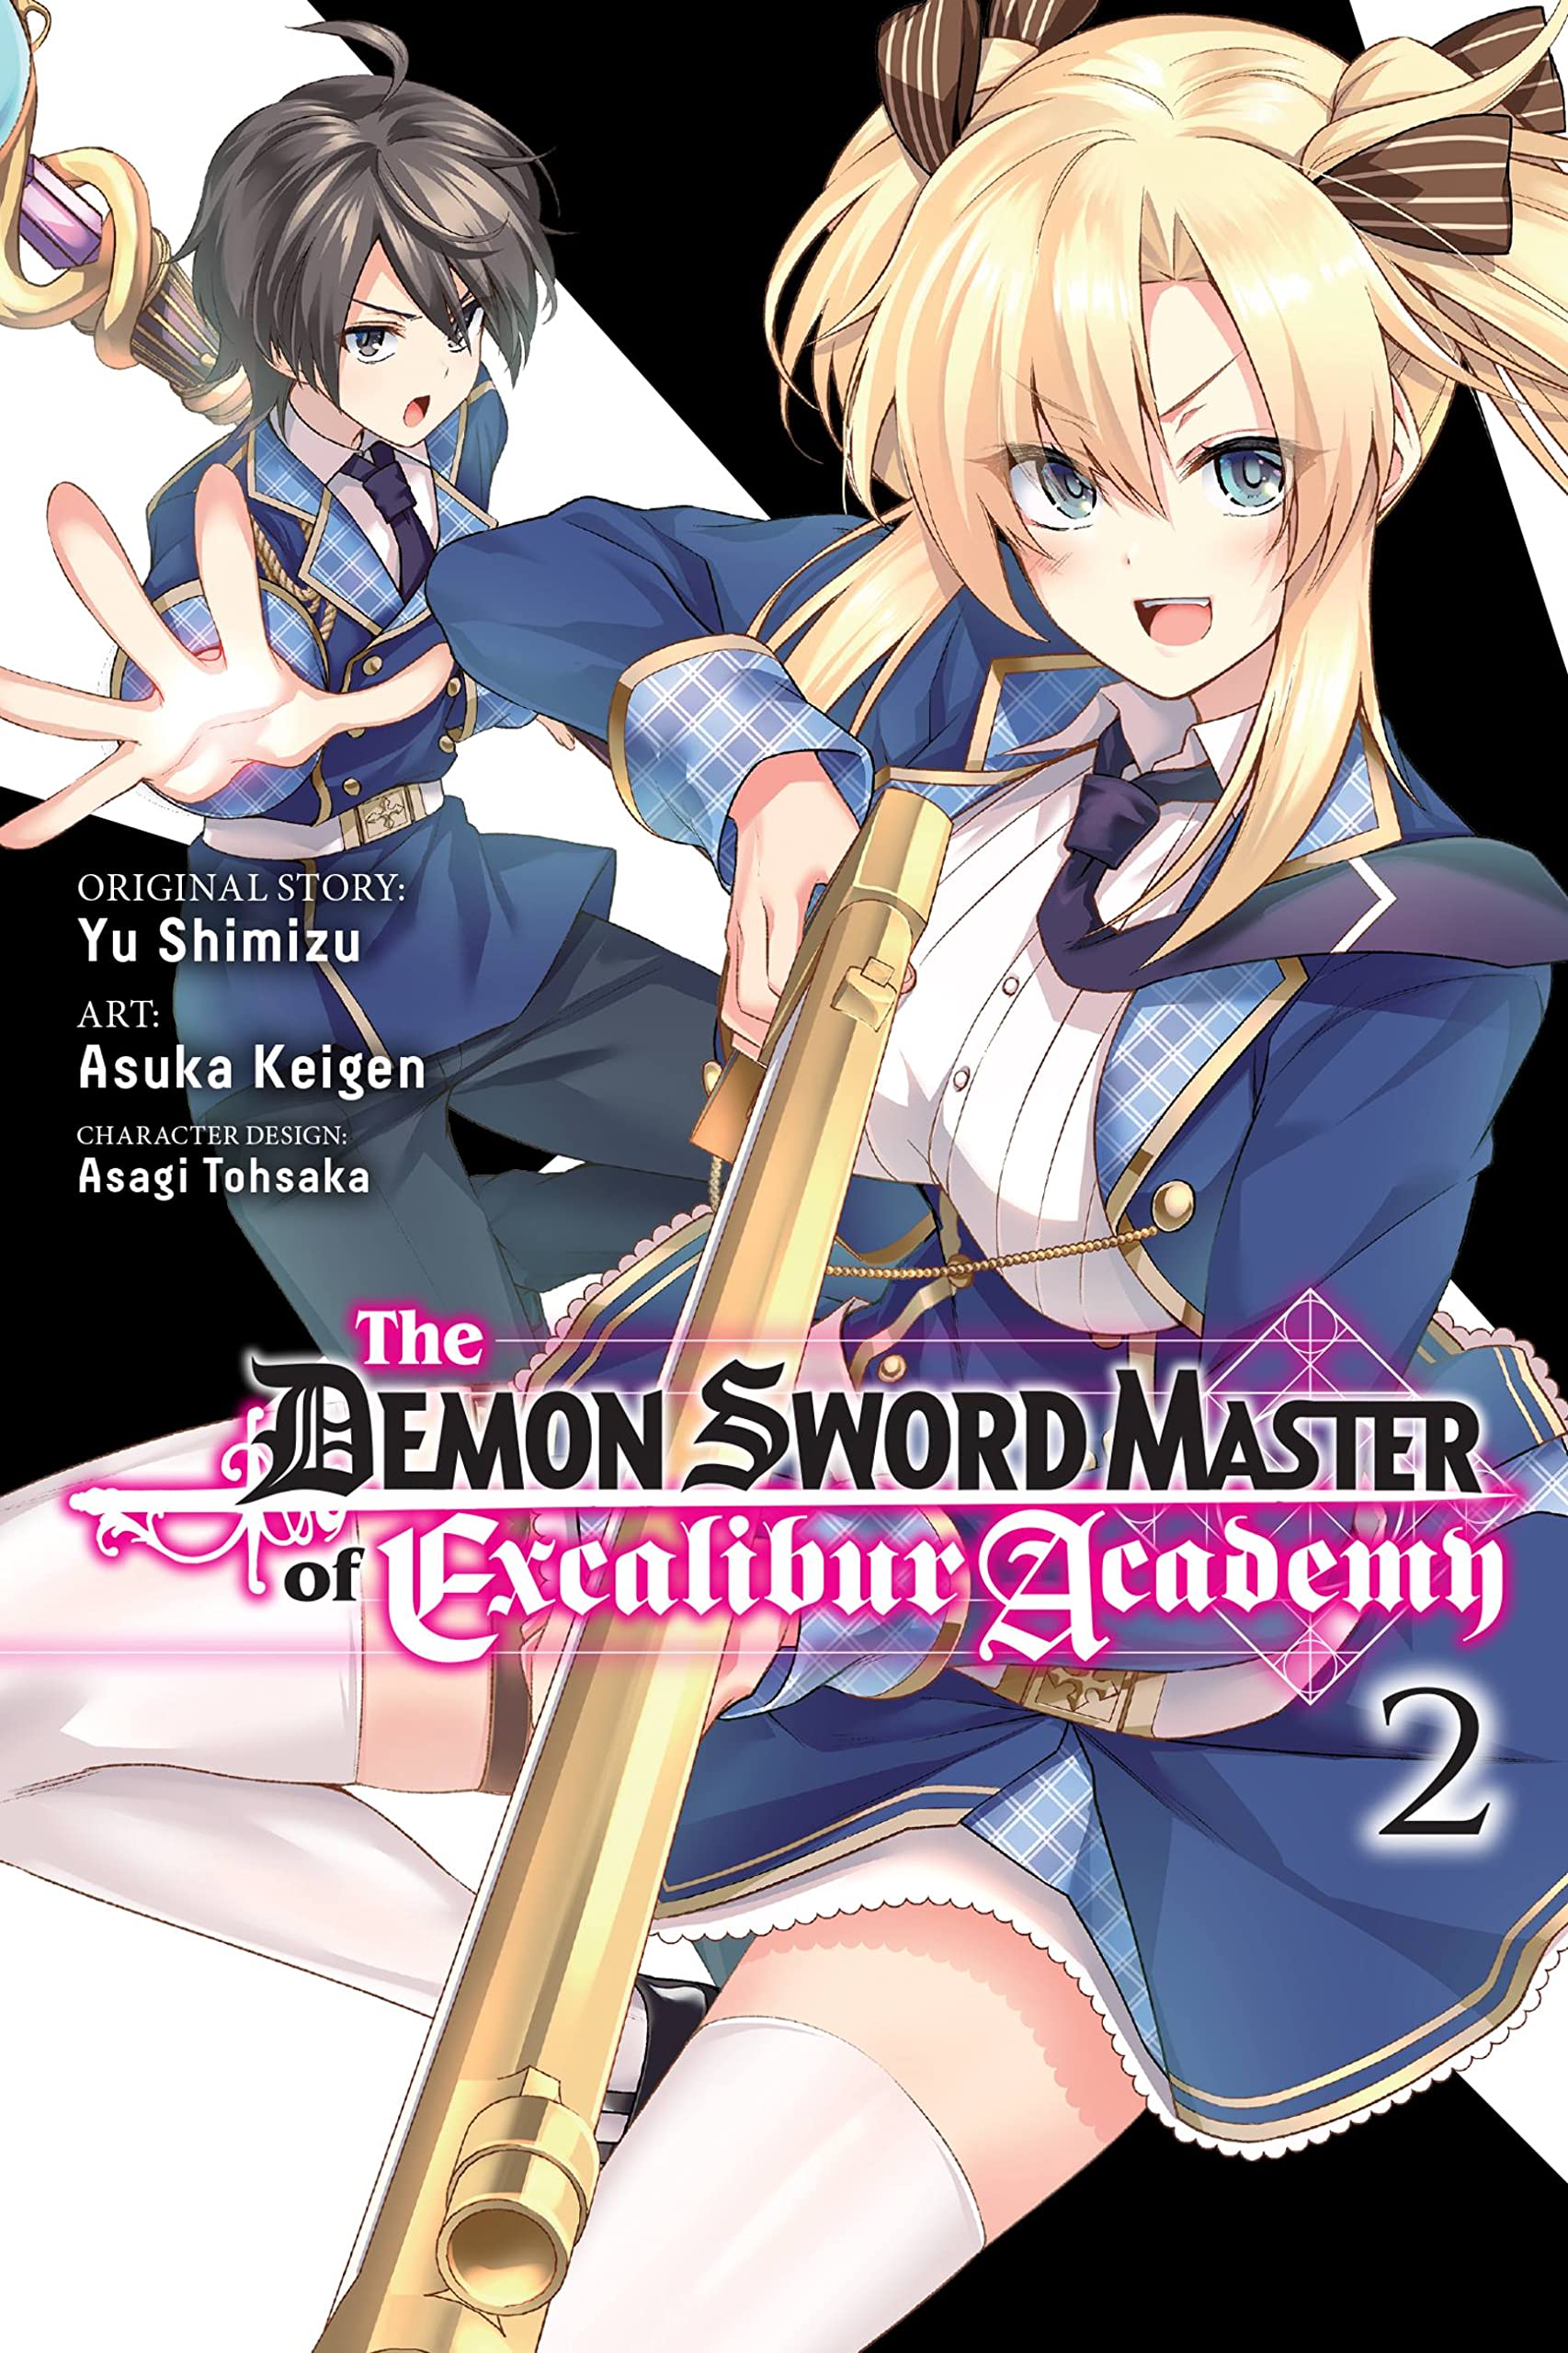 The Demon Sword Master of Excalibur Academy (Manga) Vol. 02